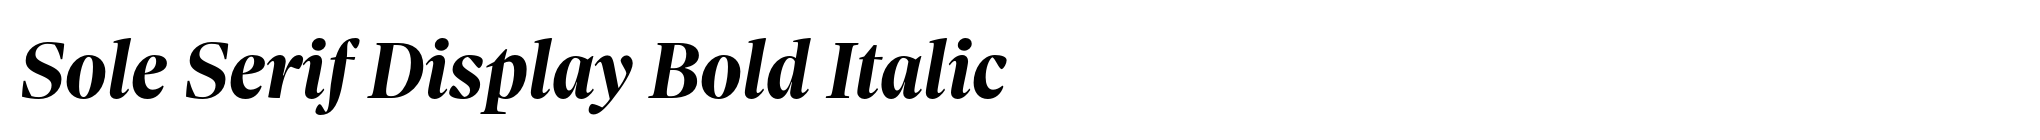 Sole Serif Display Bold Italic image